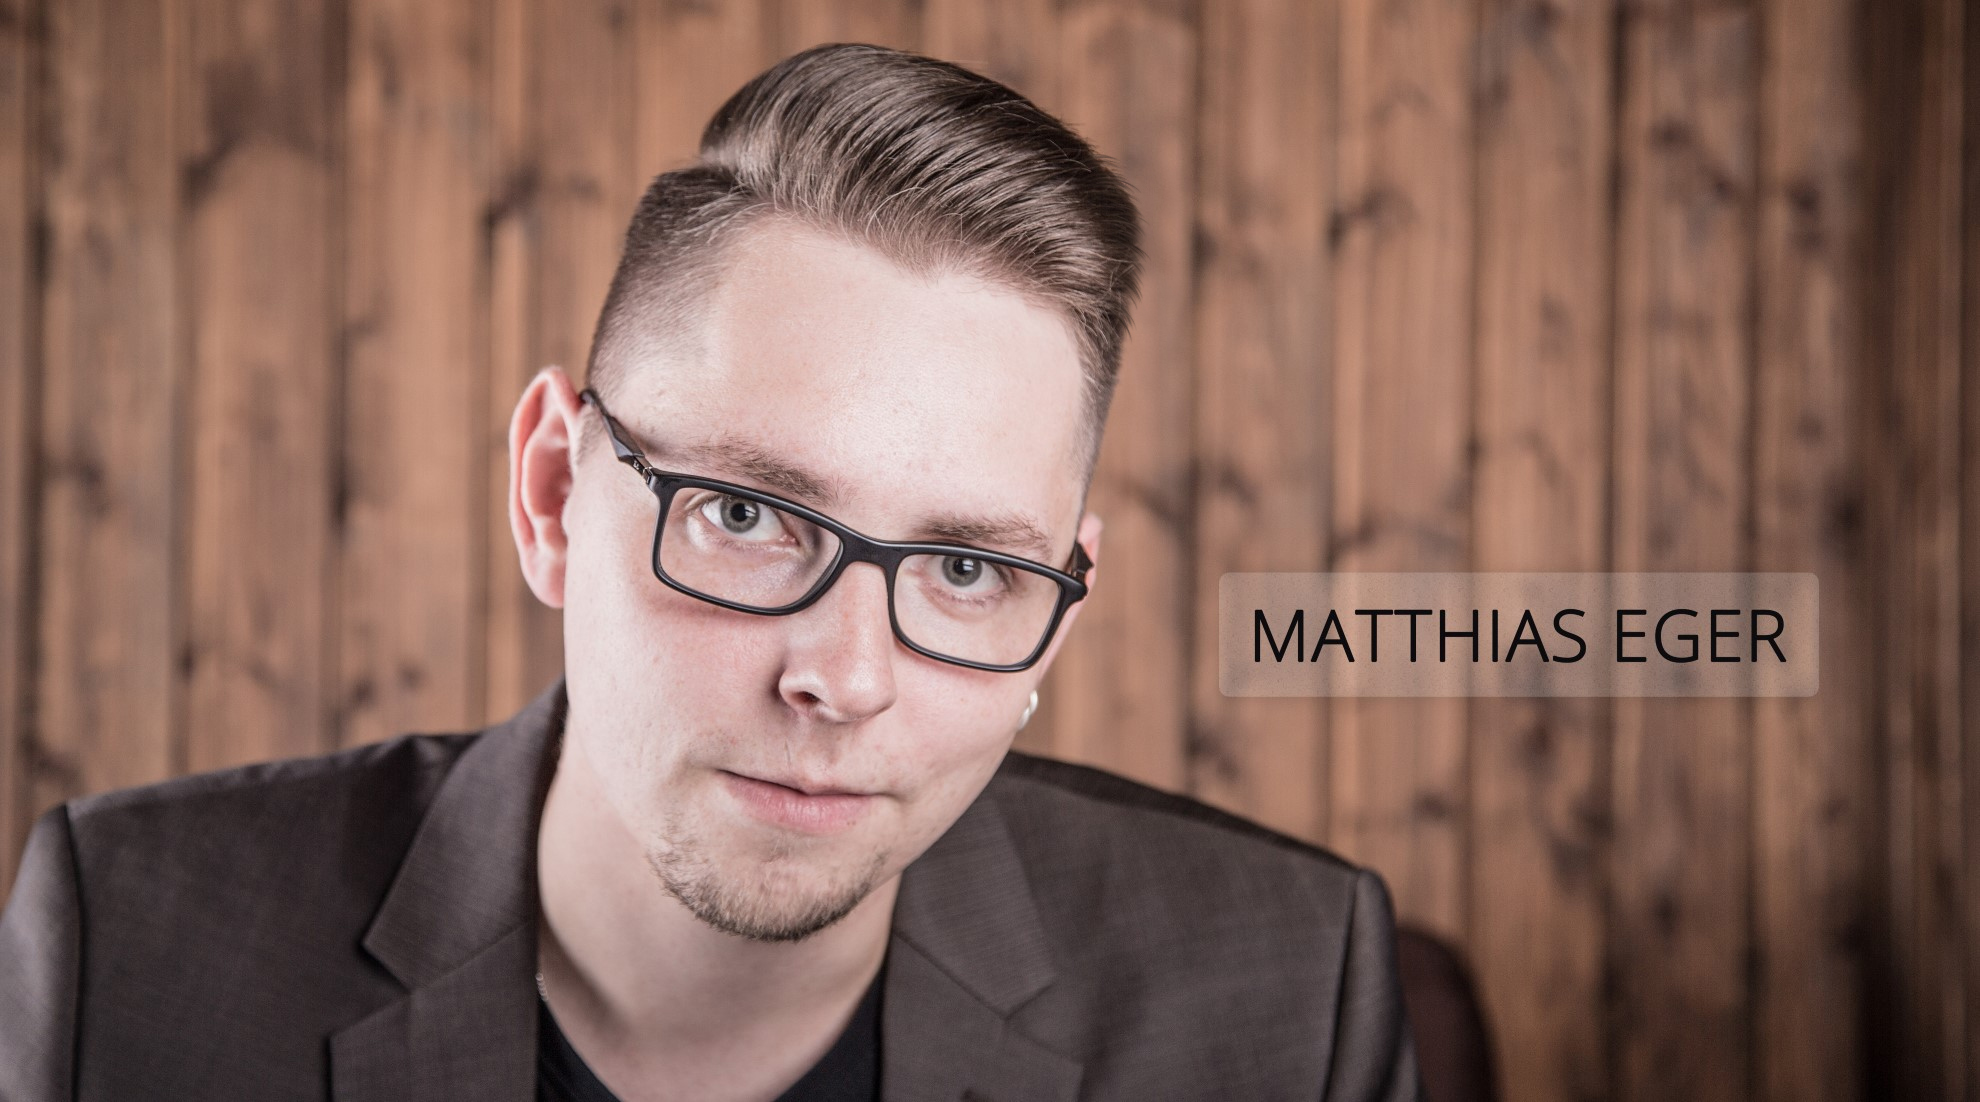 Matthias Eger